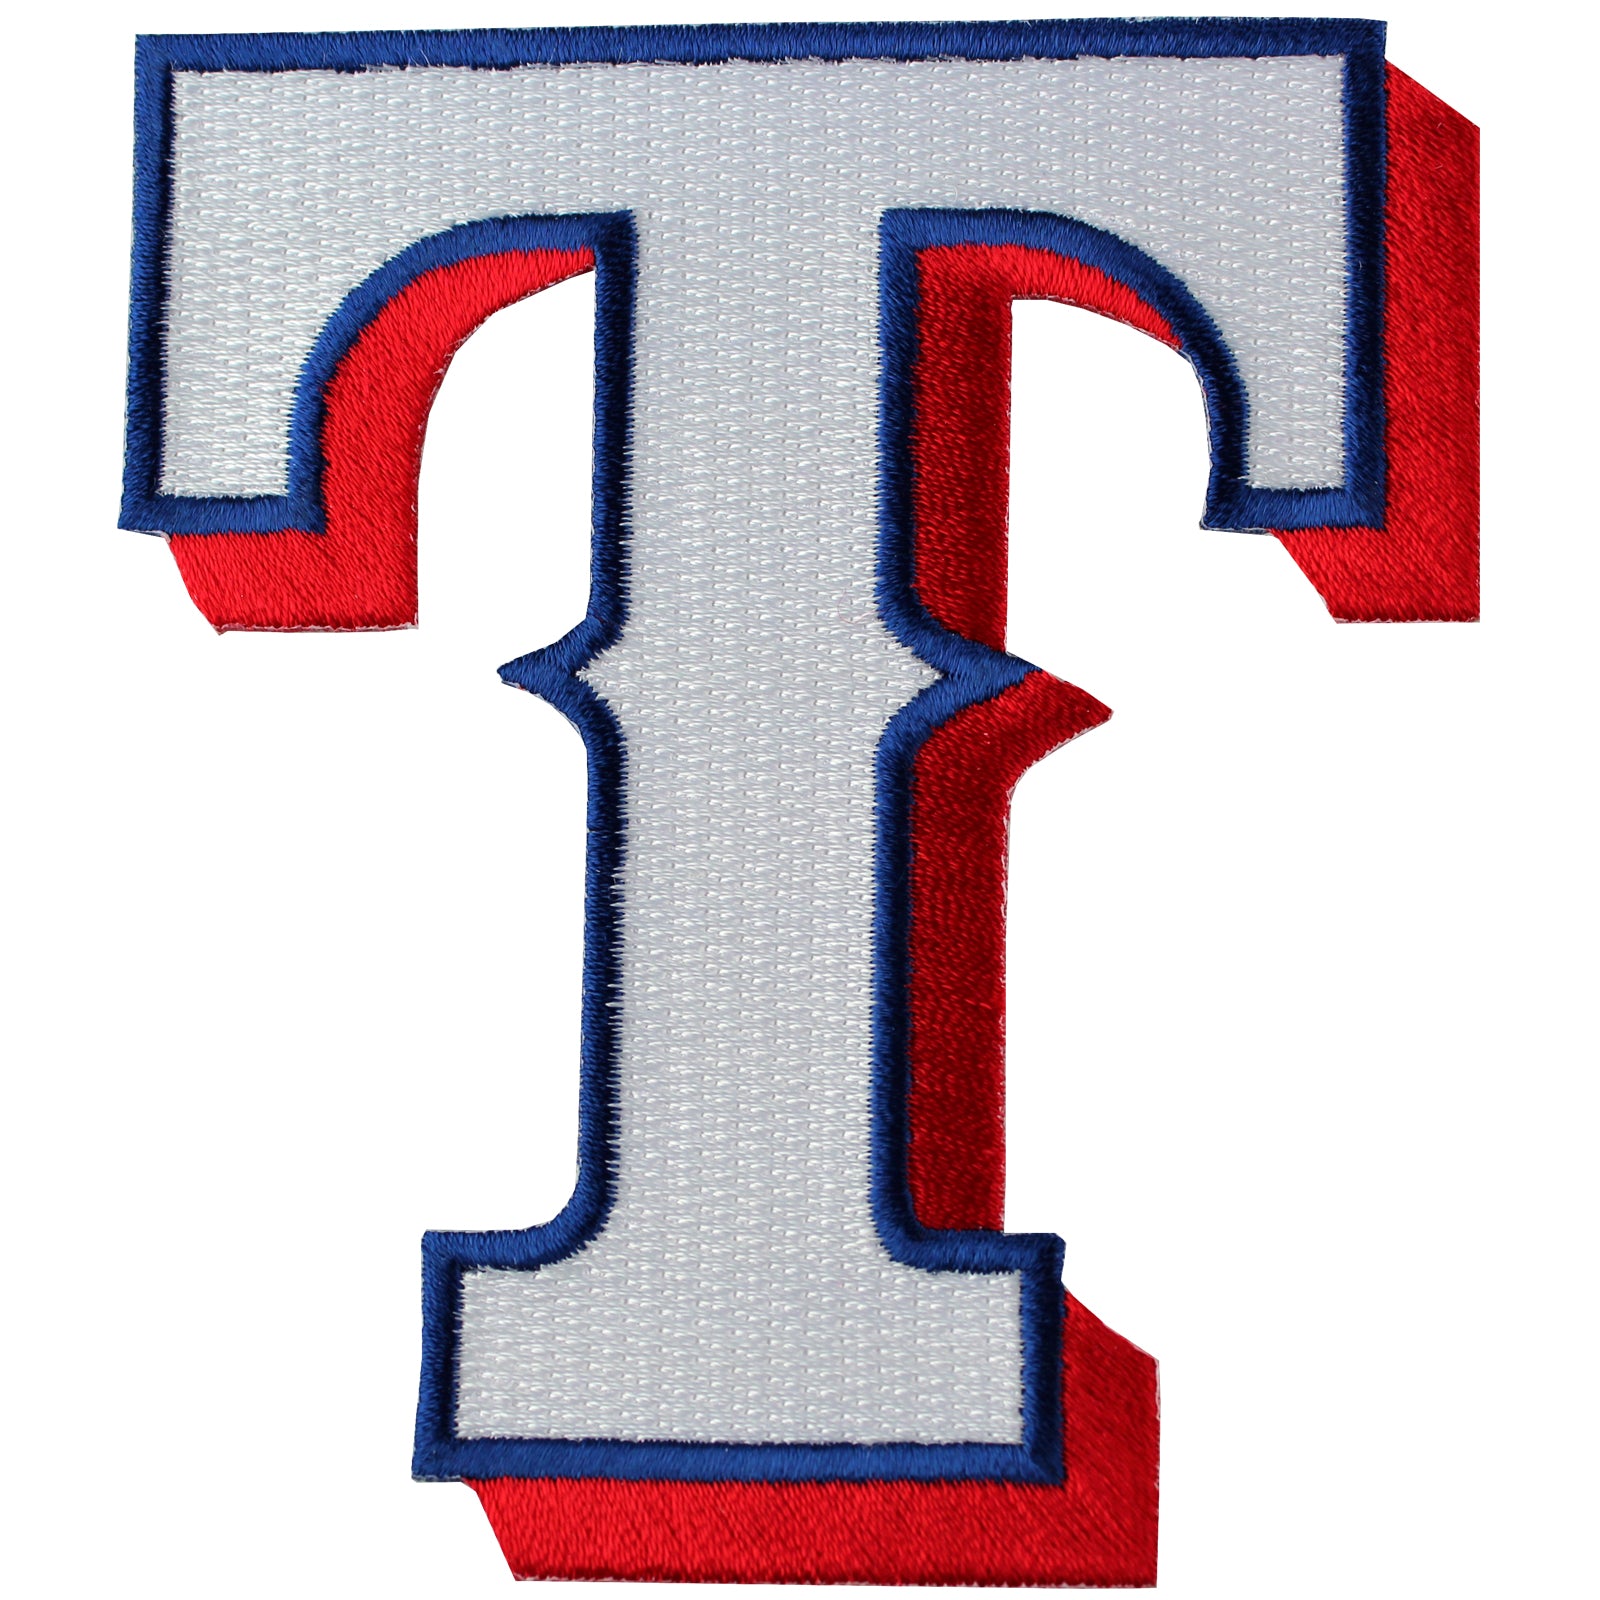 Texas Rangers "T" Hat Team Logo Patch 